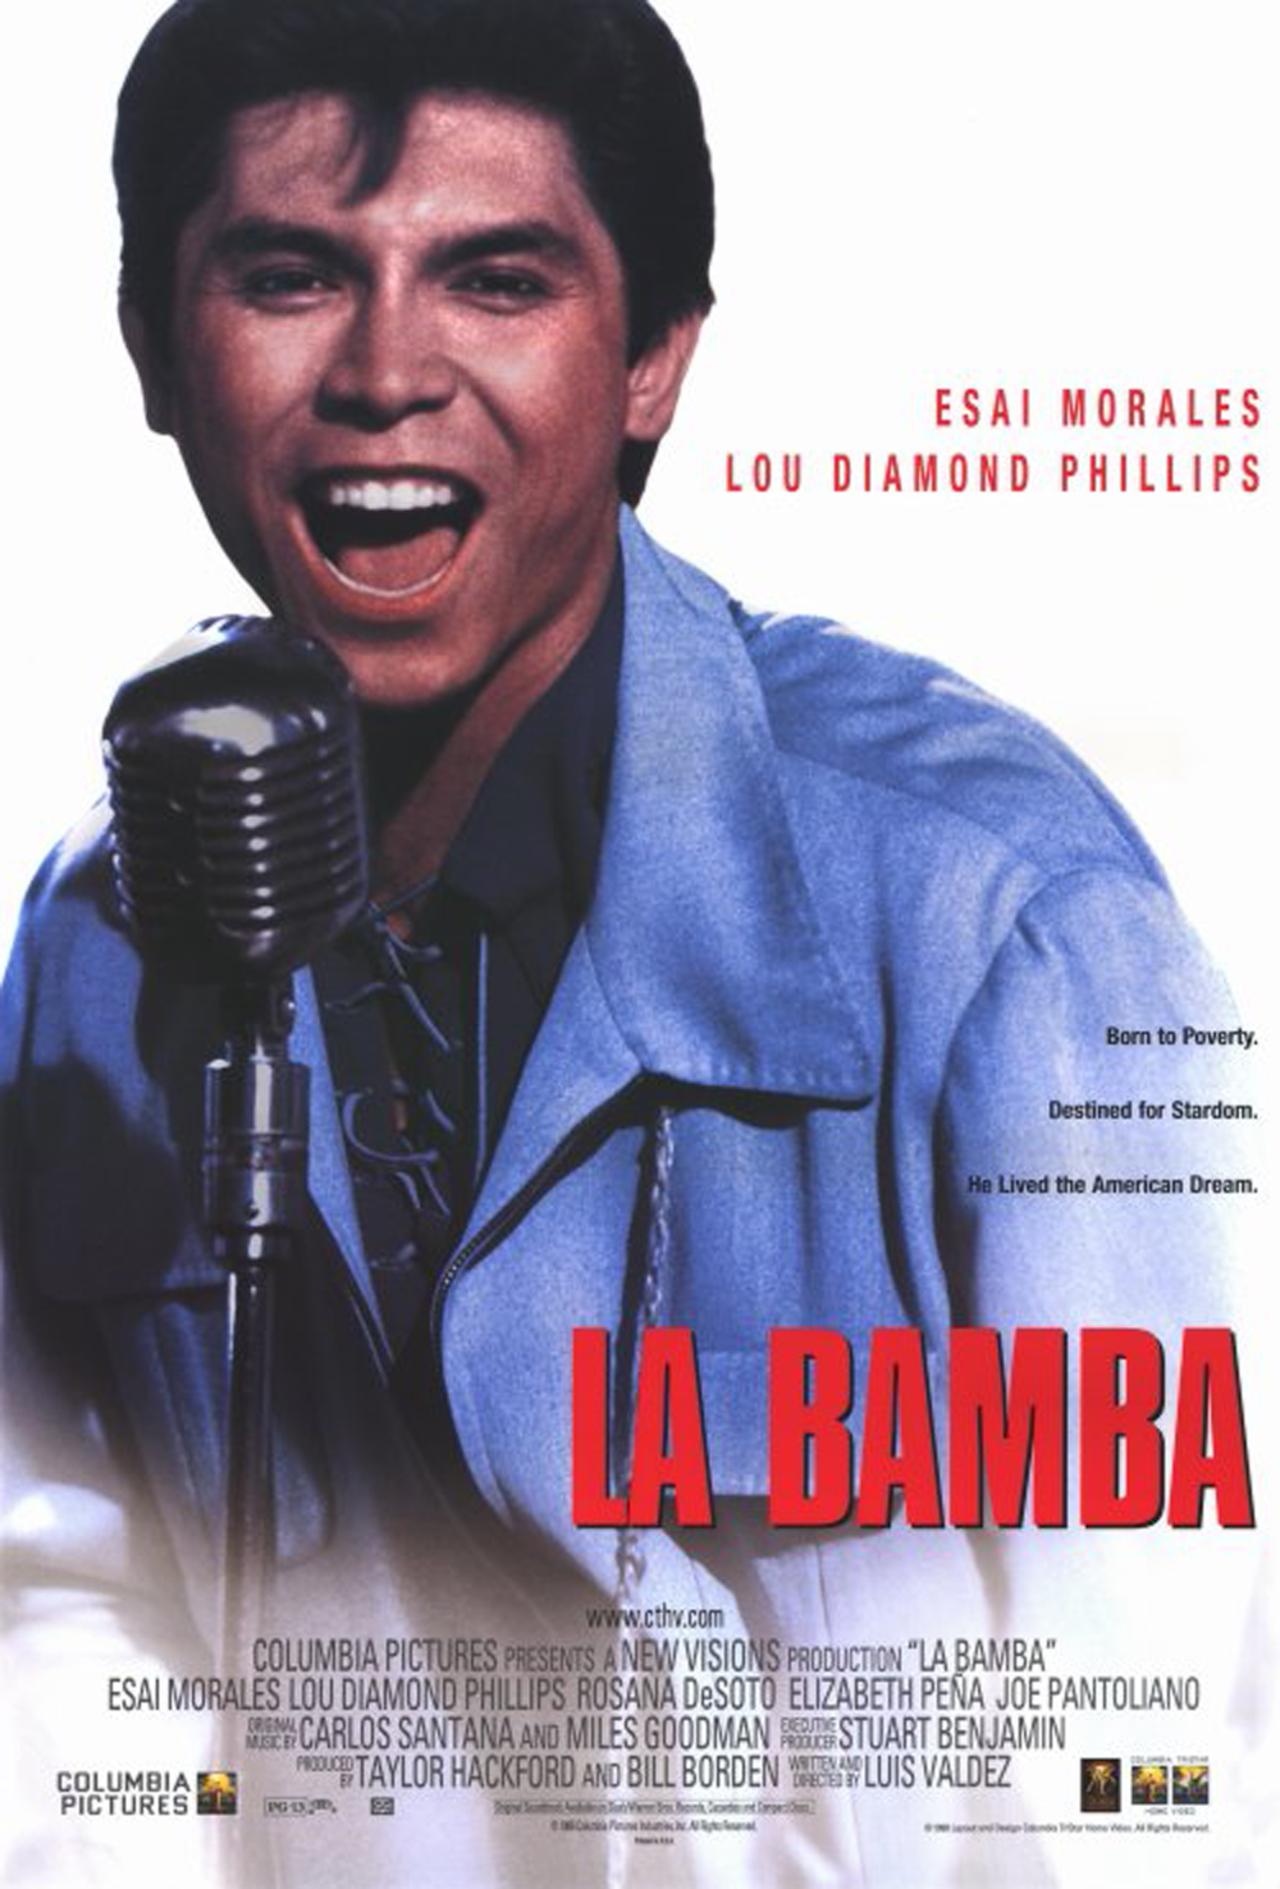 La Bamba: the movie Fiesta; Ritchie Valens; the movie La Bamba; Los Lobos. Tim's Cover Story